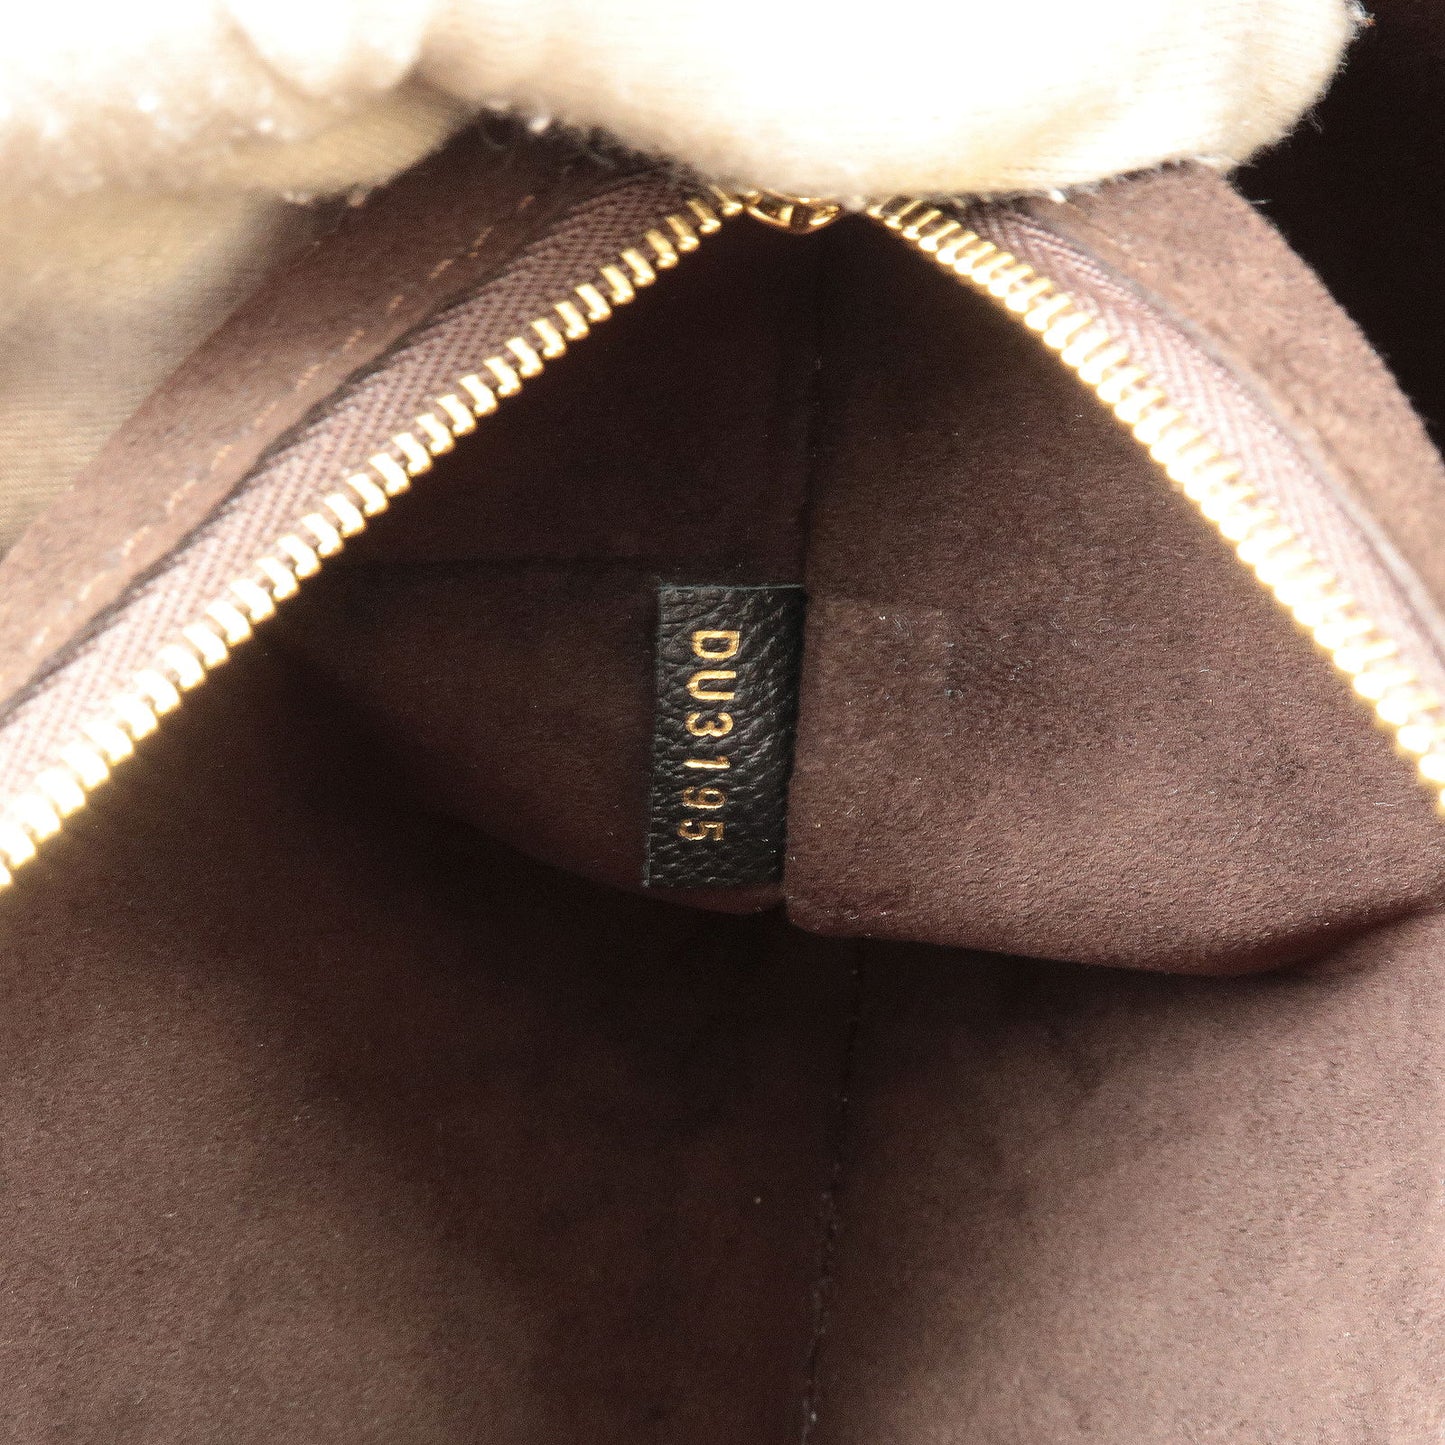 Real Louis Vuitton Monogram Kimono Tote Bag M40460 Black - $475.00